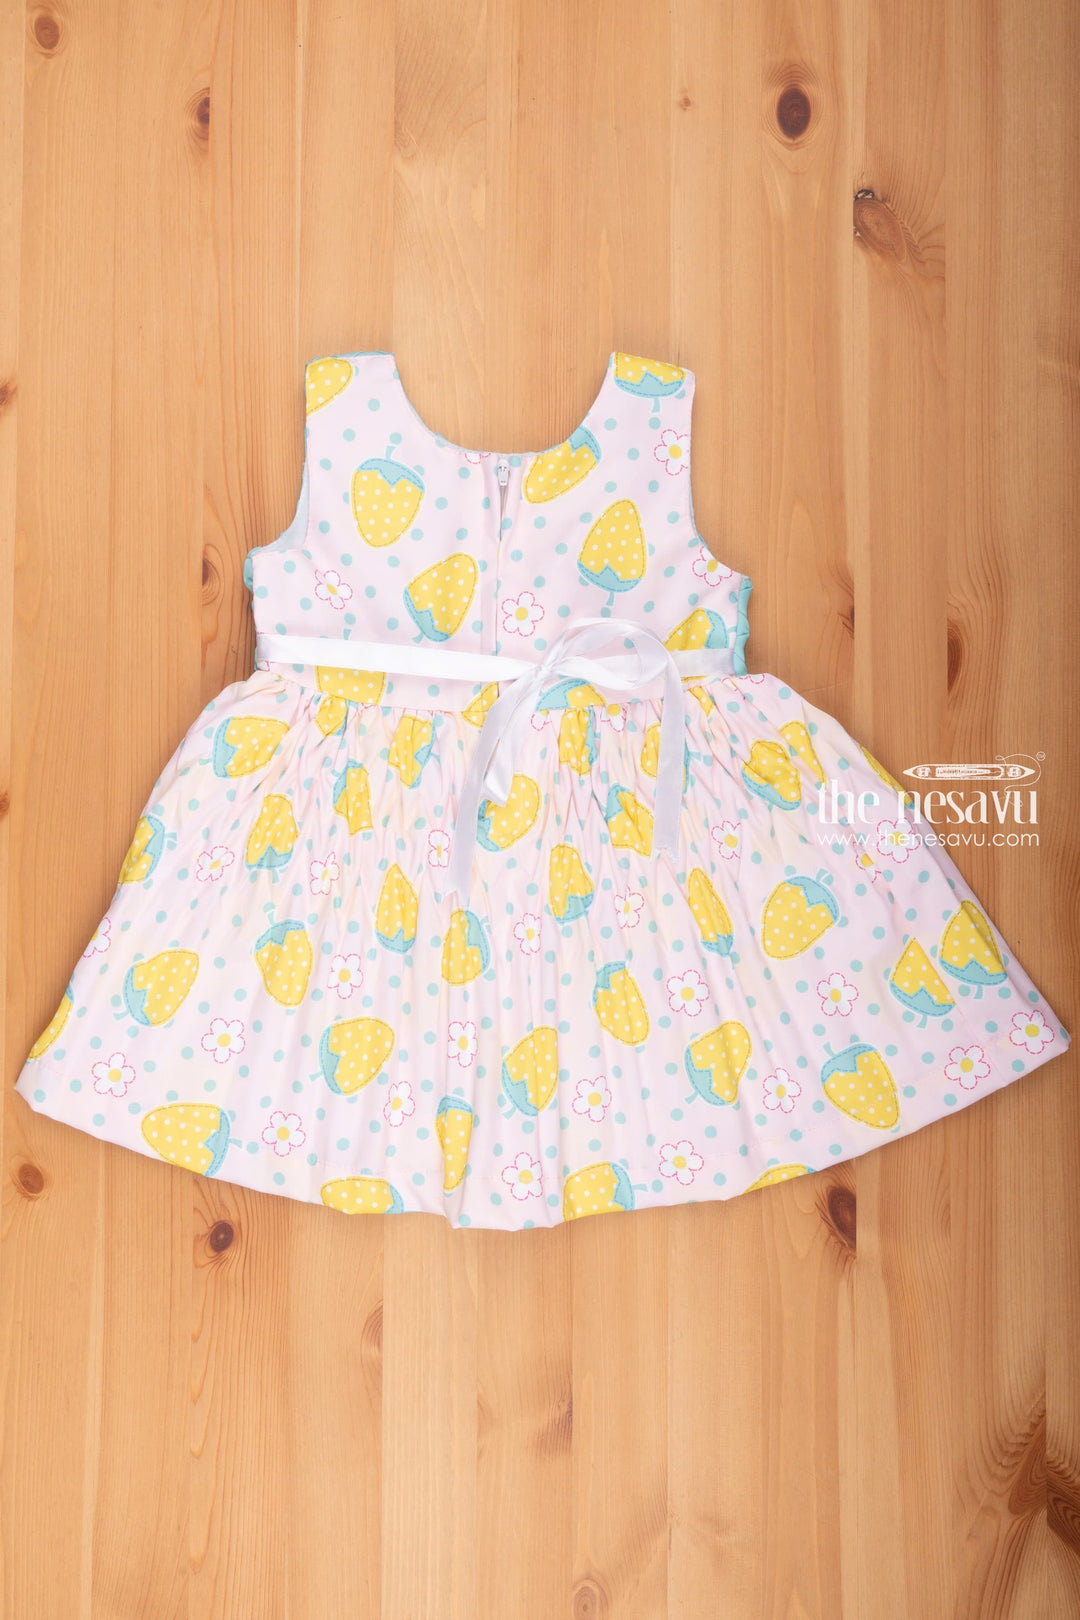 The Nesavu Baby Fancy Frock Stylish Salmon Cotton Dress: Strawberry Prints for Young Charms Nesavu Baby Girl Dresses | Cotton Outfit for Newborn | the Nesavu